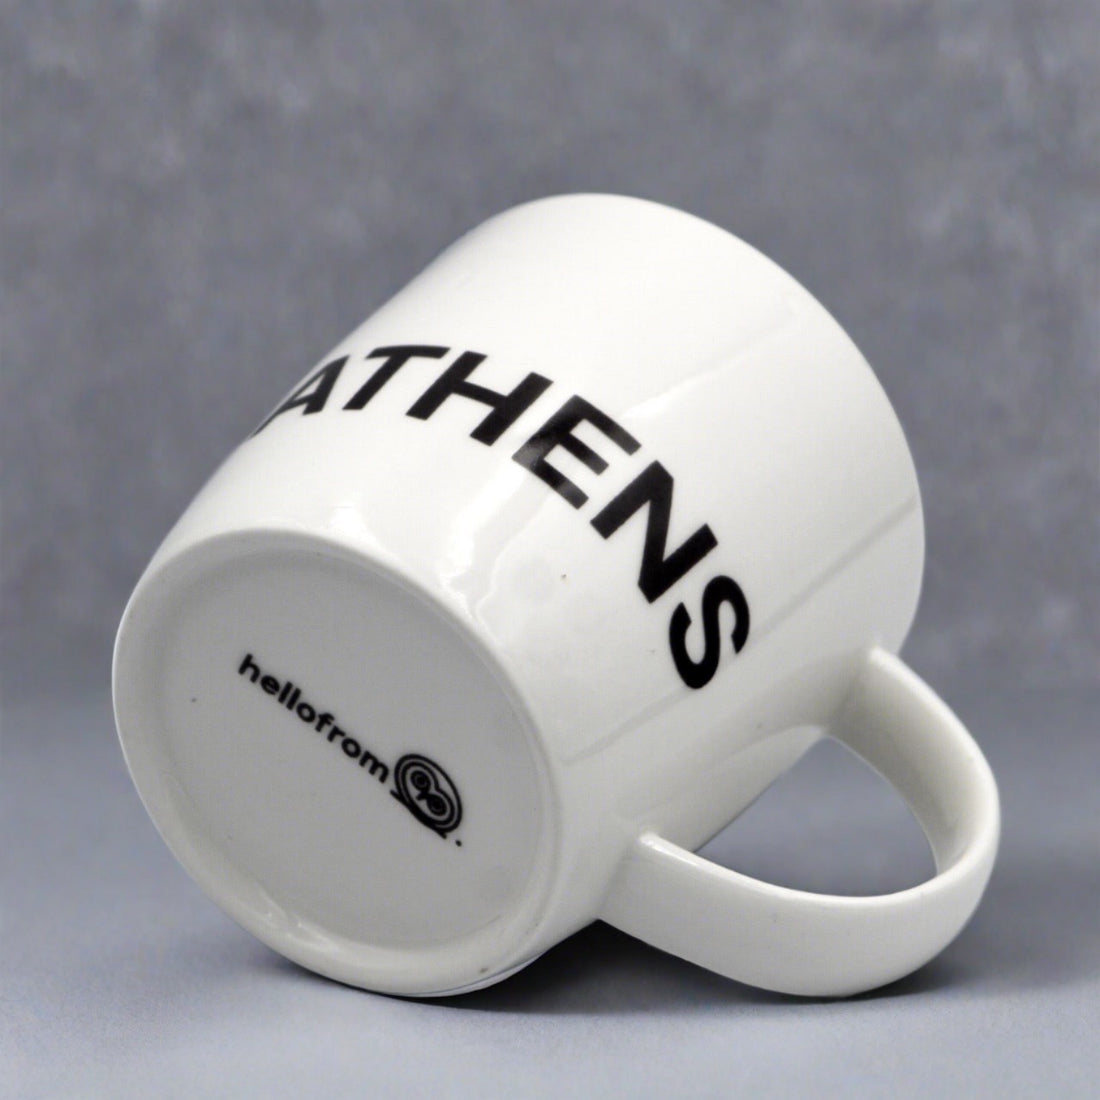 hellofrom Athens | porcelain mug